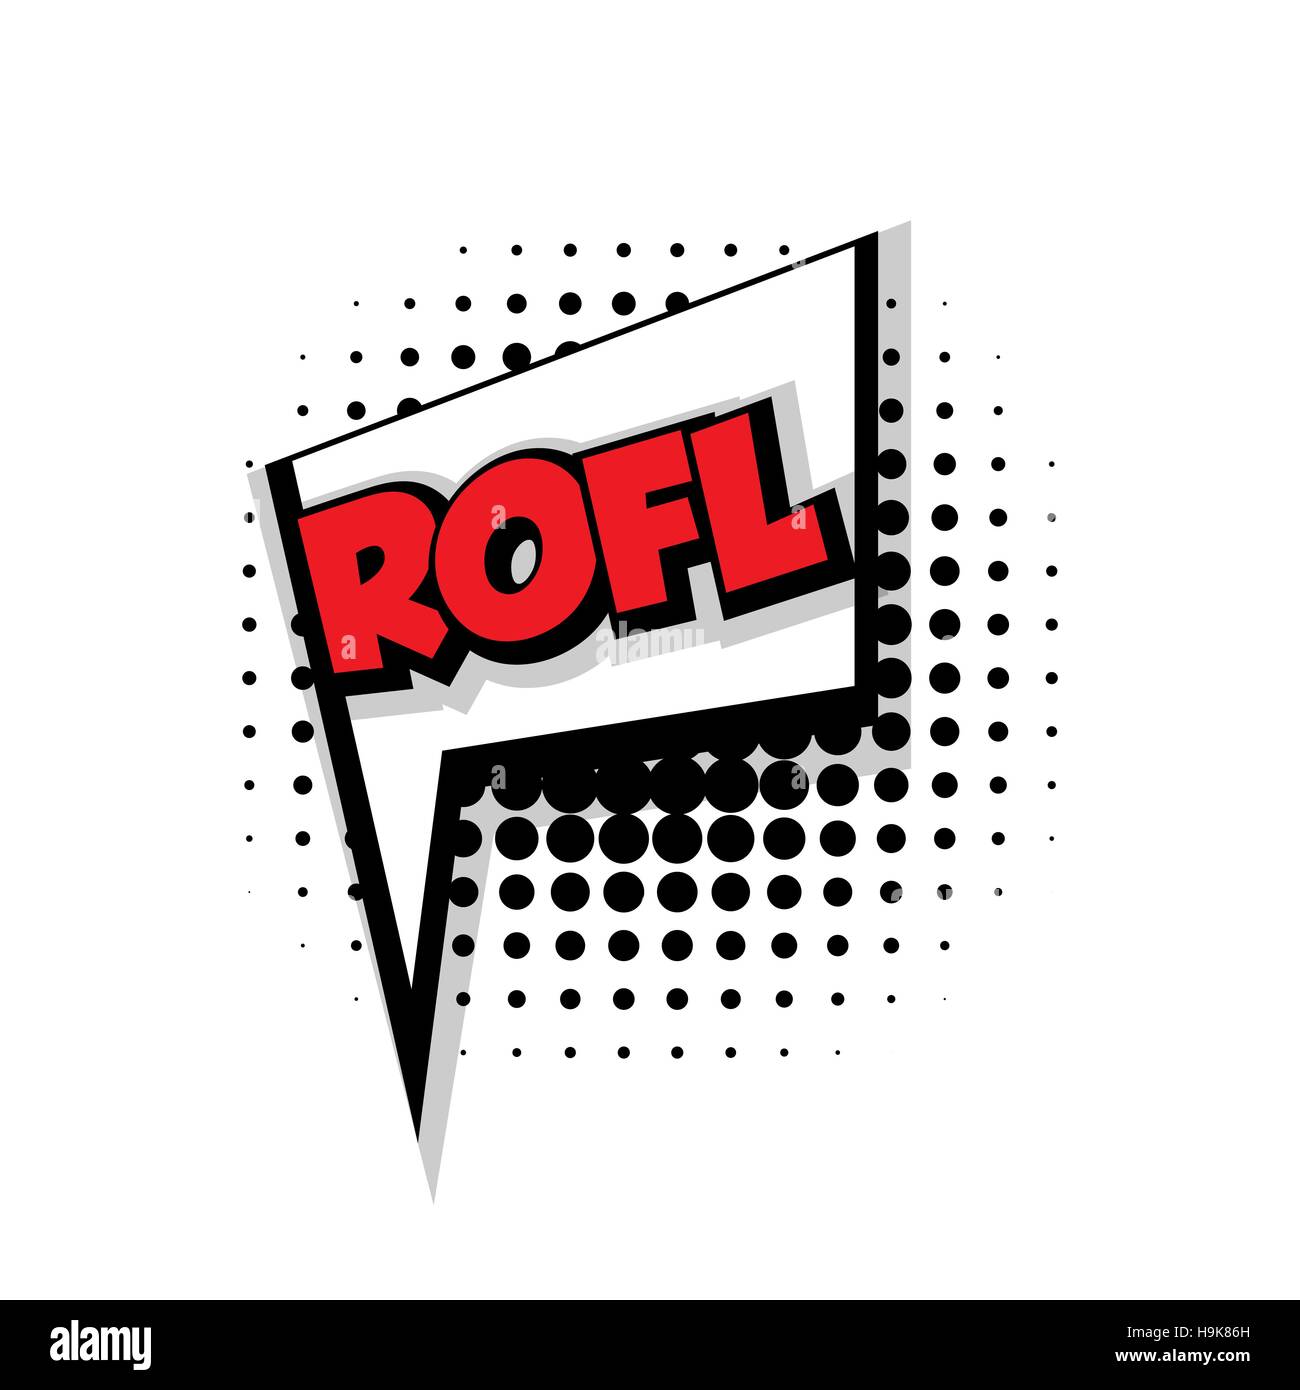 Rofl fotografías e imágenes de alta resolución - Alamy